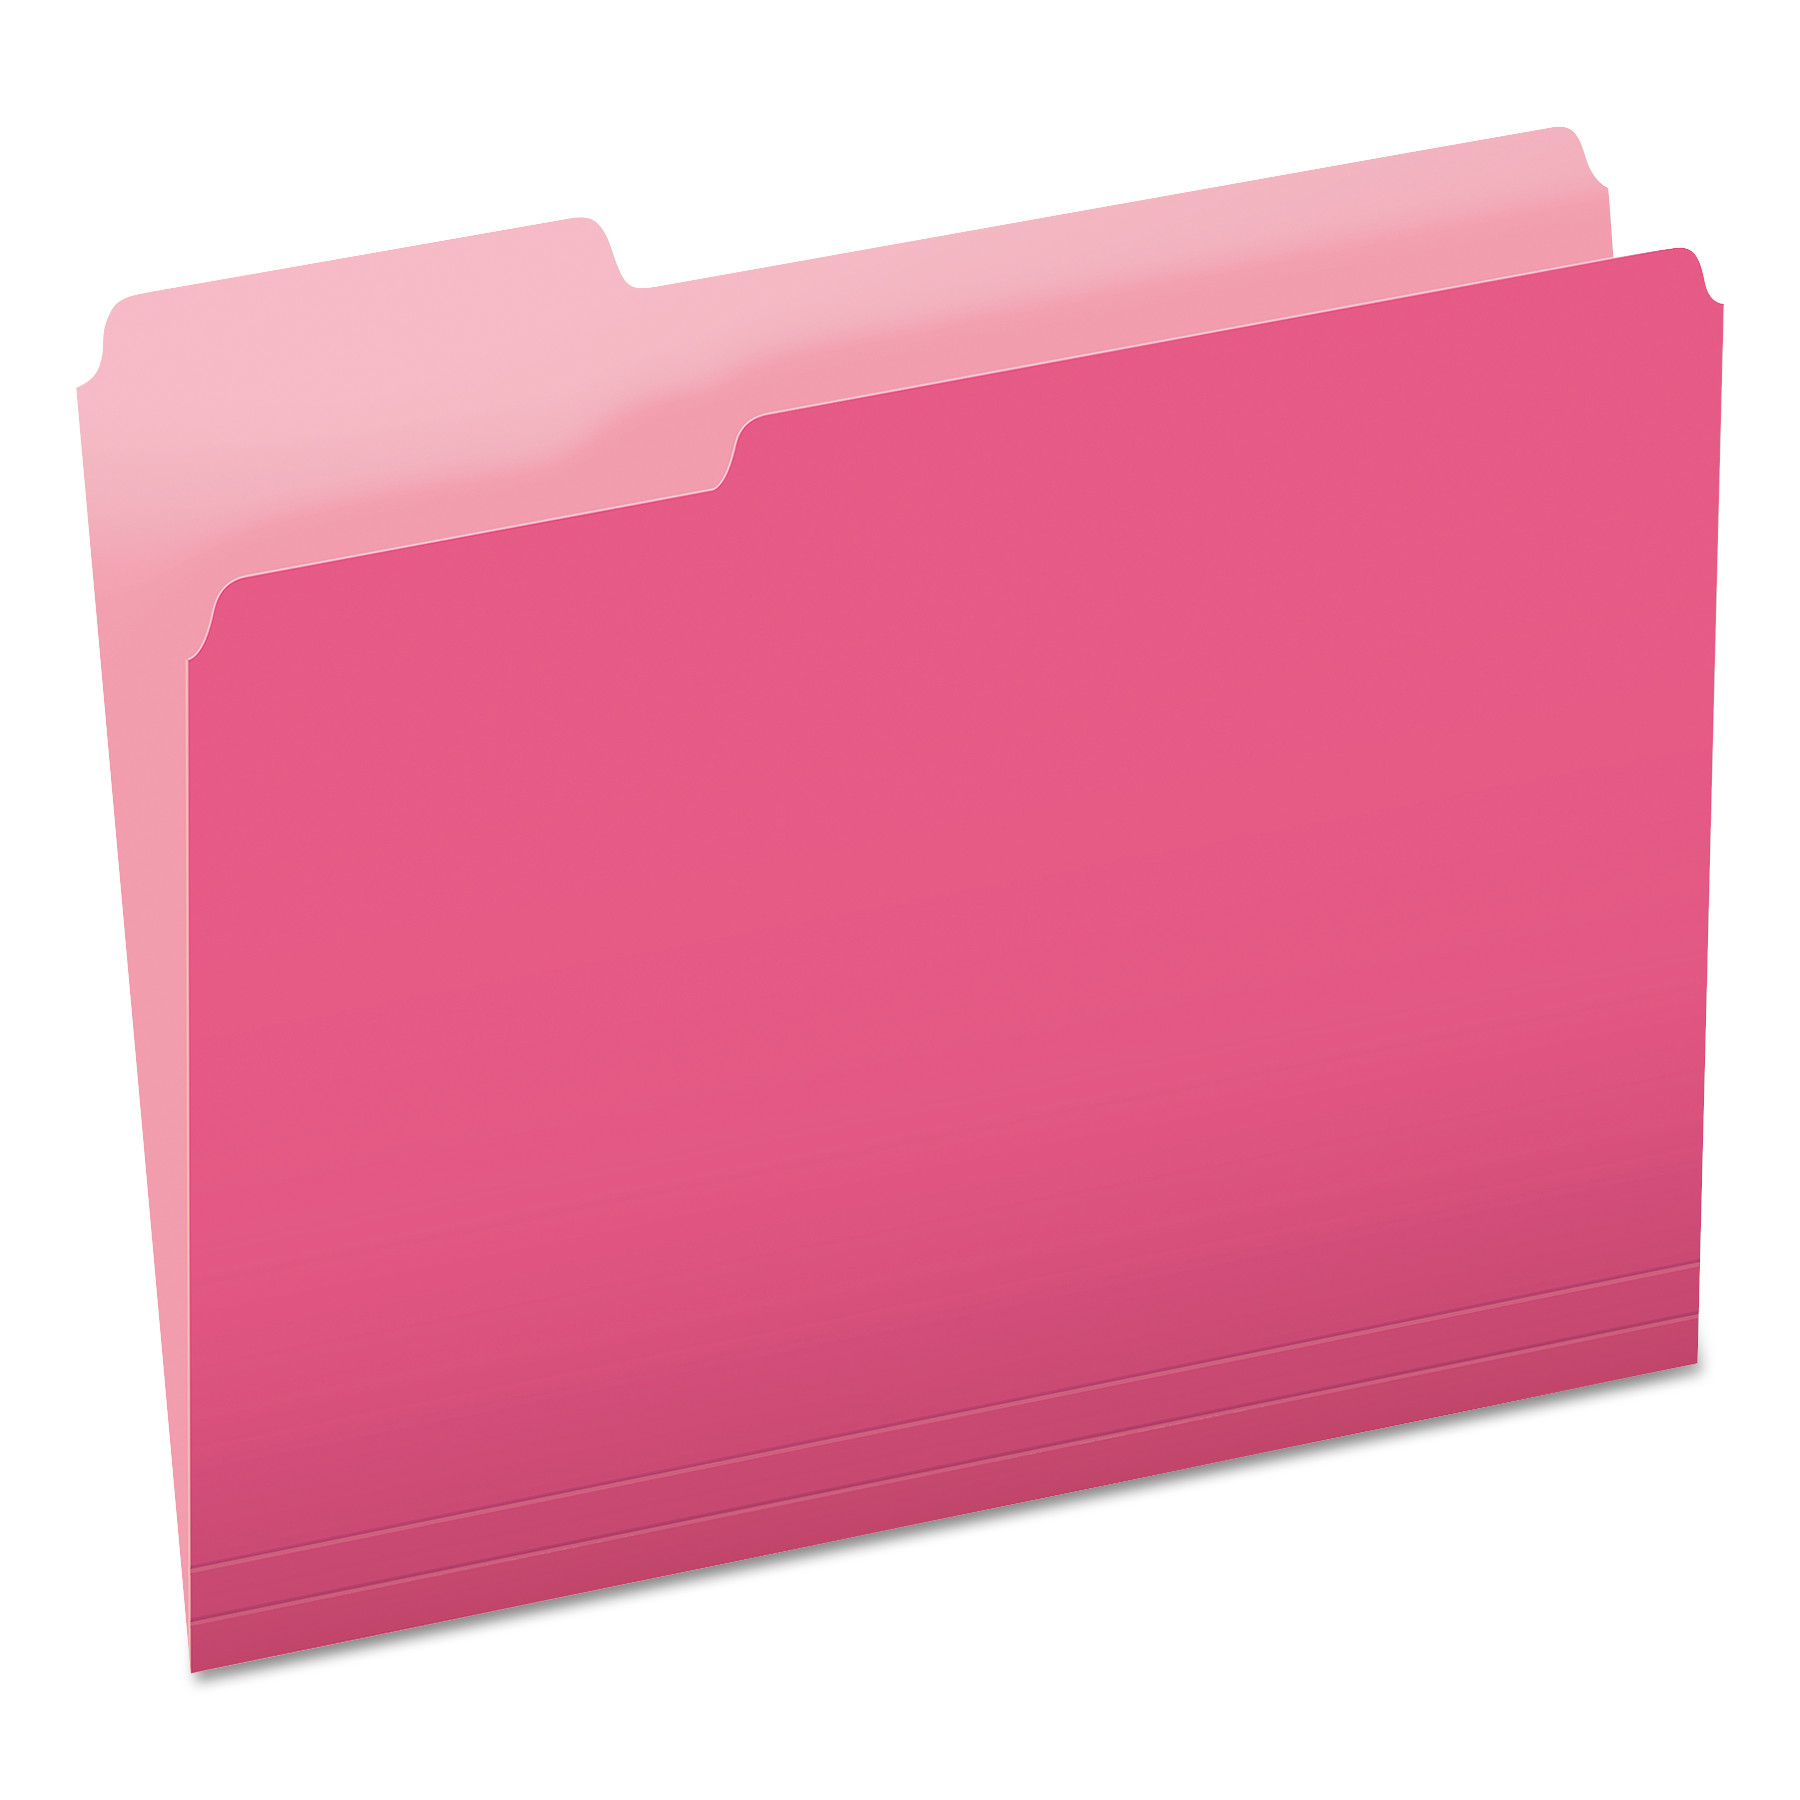  Pendaflex 152 1/3 PIN Colored File Folders, 1/3-Cut Tabs, Letter Size, Pink/Light Pink, 100/Box (PFX15213PIN) 